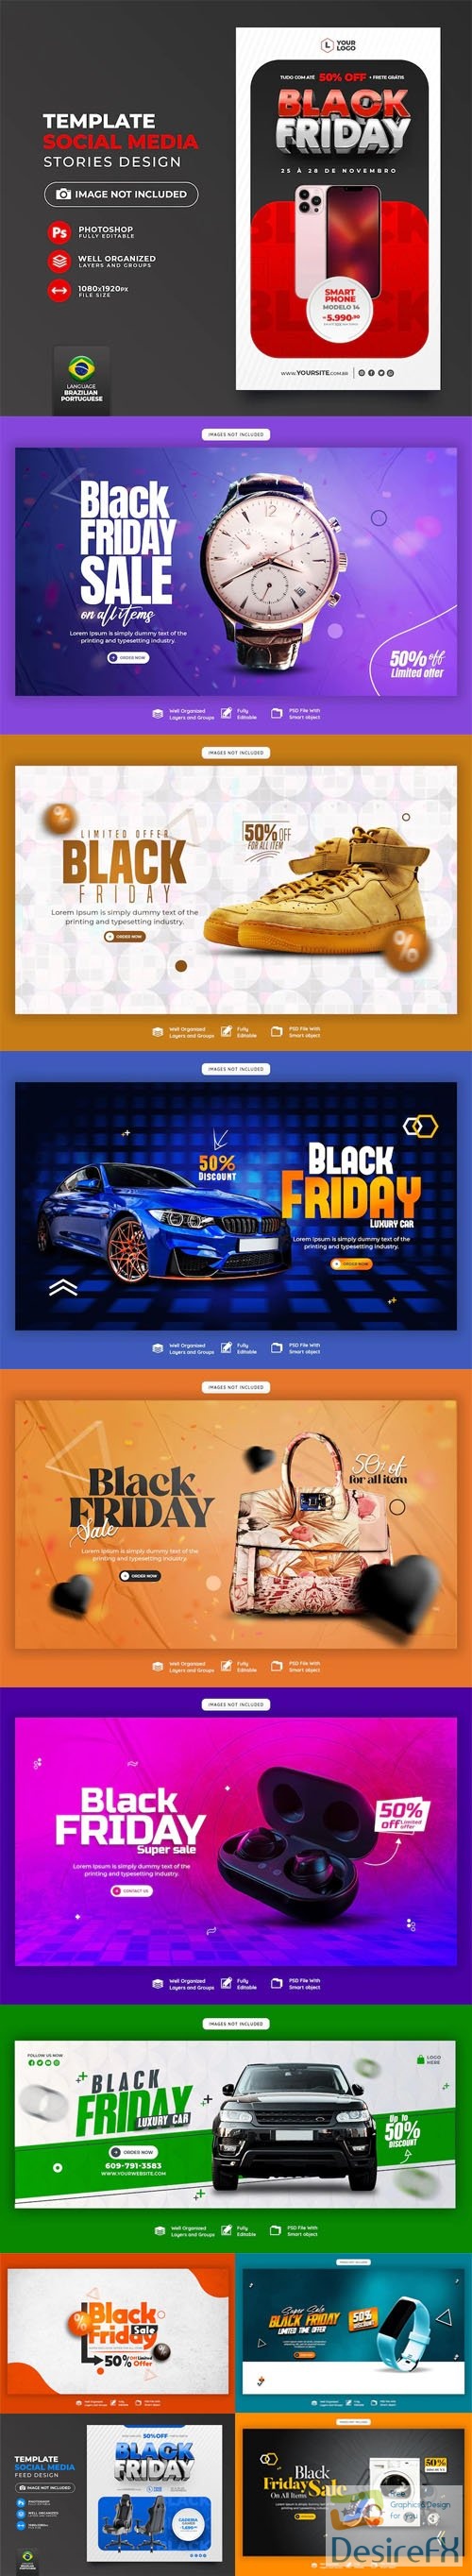 Black Friday Super Sales - 10+ Modern Web Banners PSD Templates Vol.1